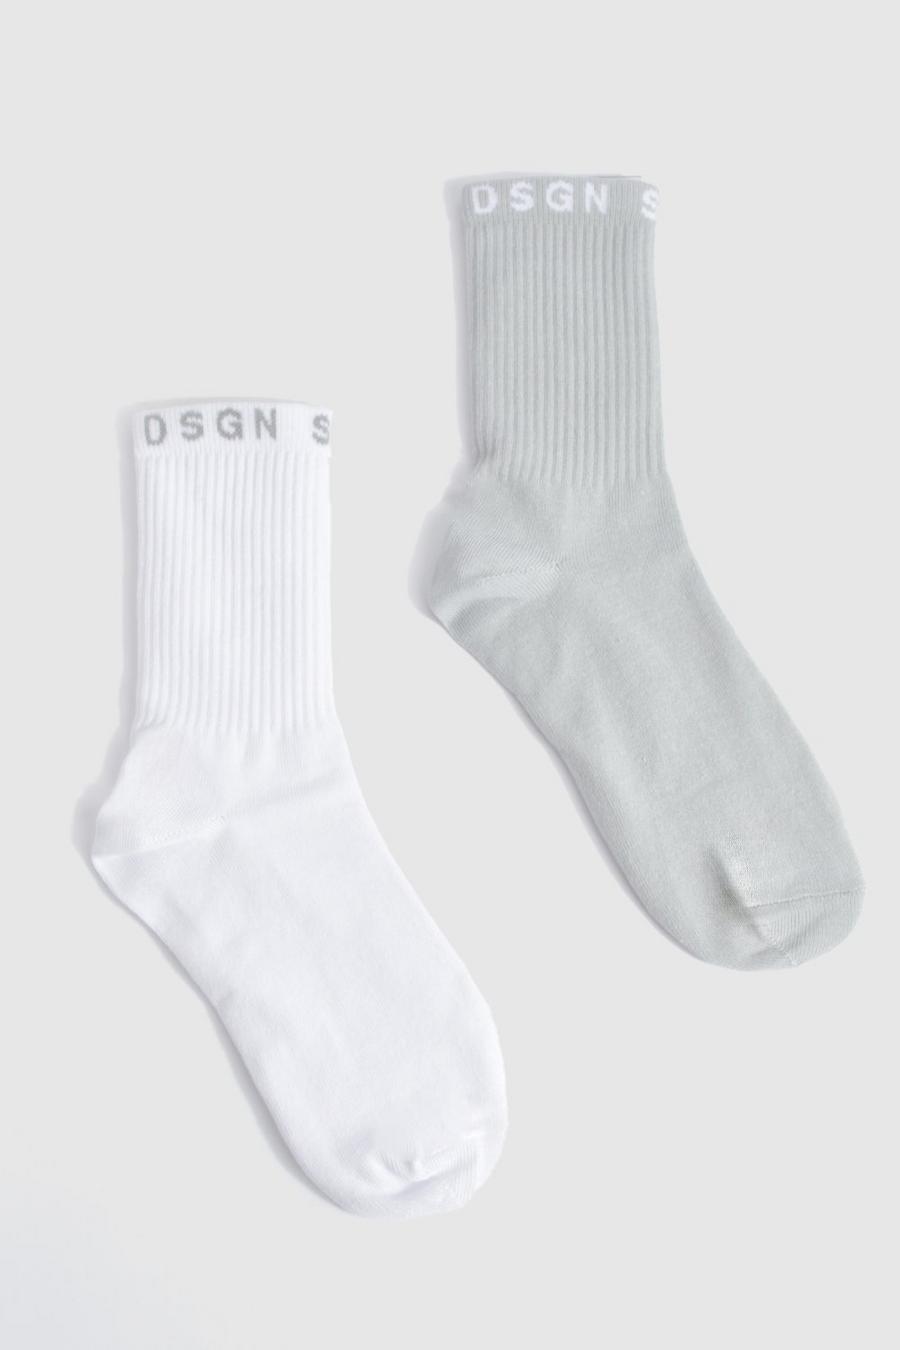 Sage Dsgn Studio 2 Pack Sports Socks